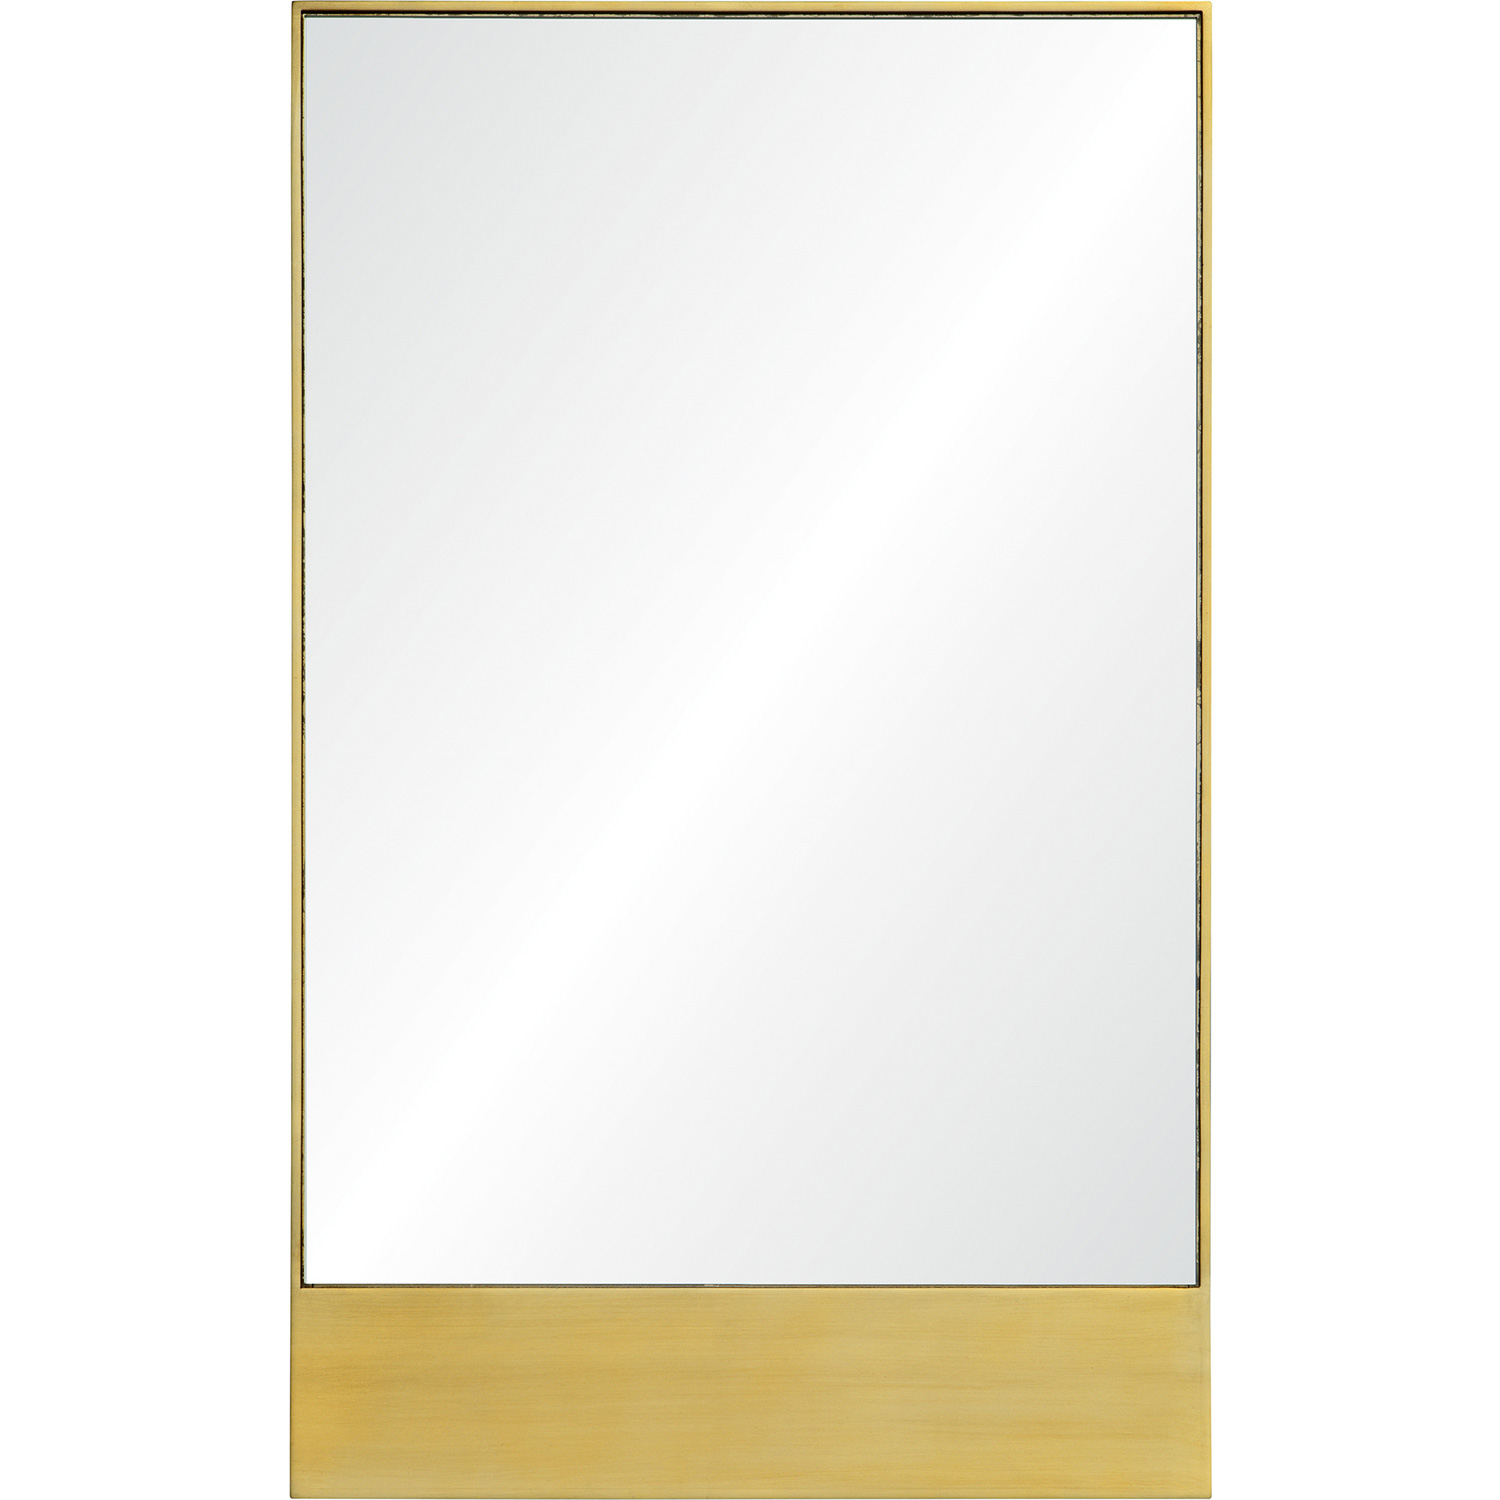 Ren-Wil Sadler Rectangle Mirror - Gold Leaf